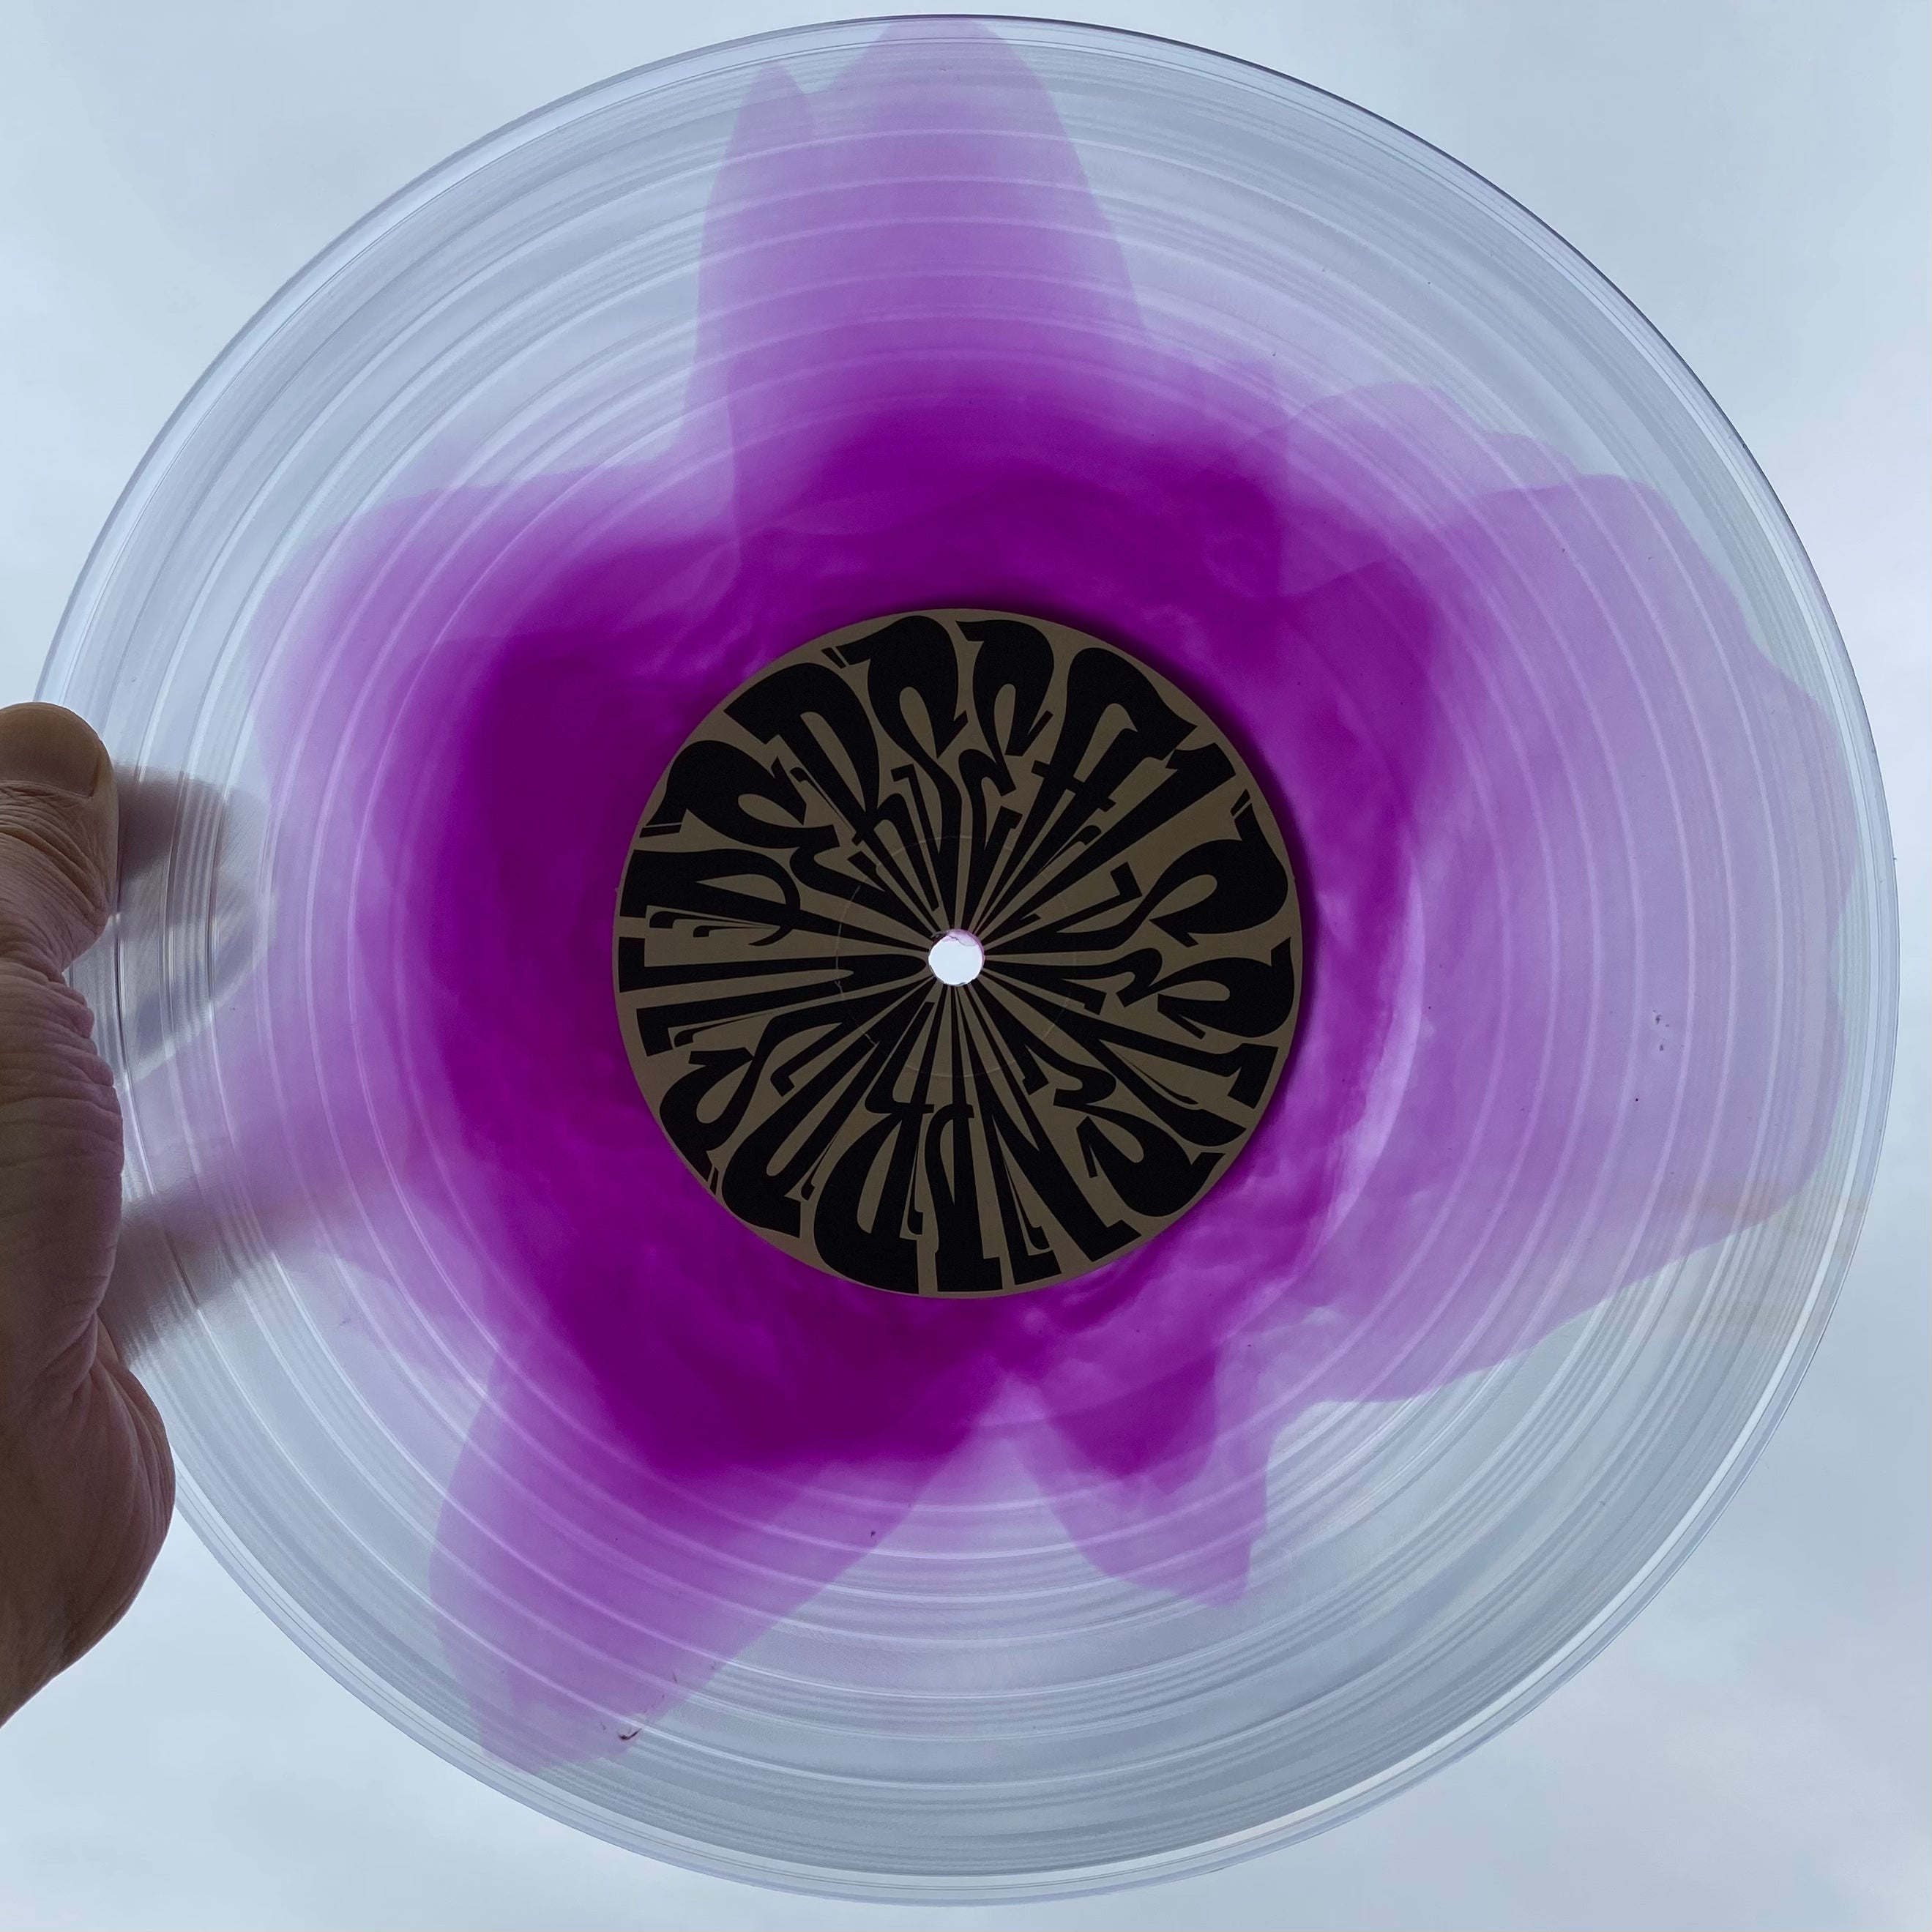 🔥 SuperSeal Giant Robo VII pro ☄️Right Arm 10” Purple Haze Vinyl! 🌋